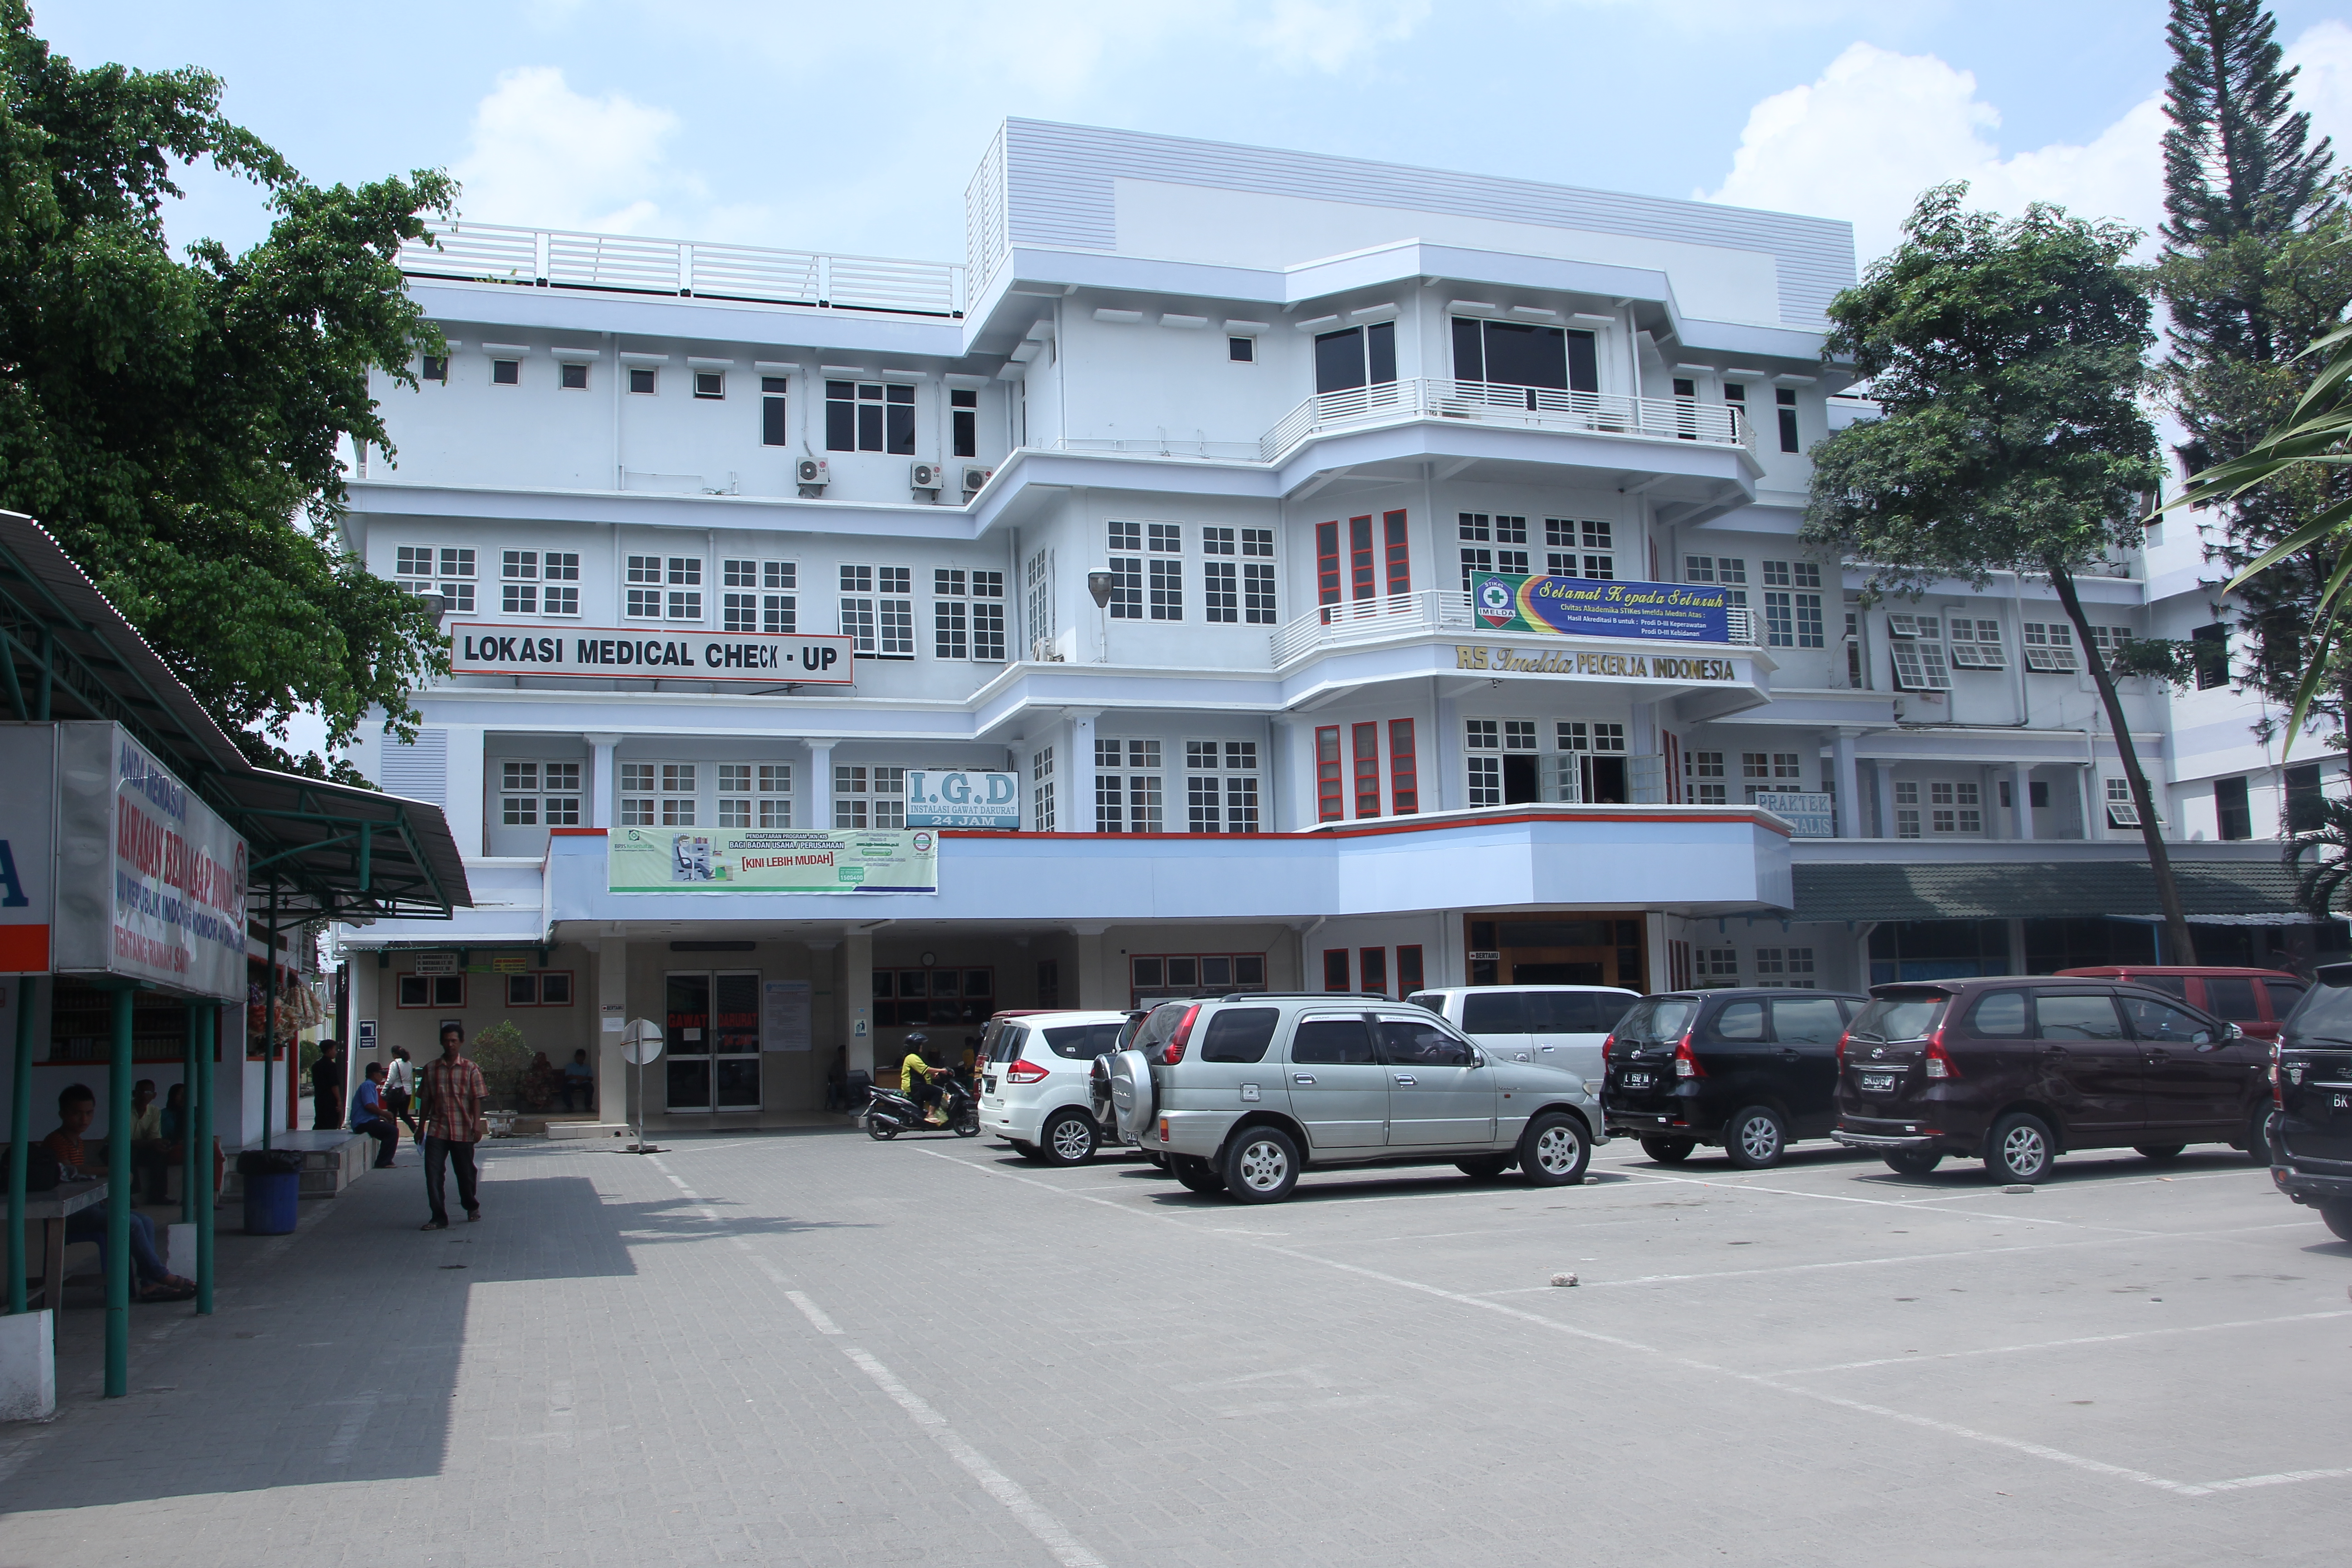 Rumah Sakit Umum Imelda Rsu Imelda Universitas Imelda Medan